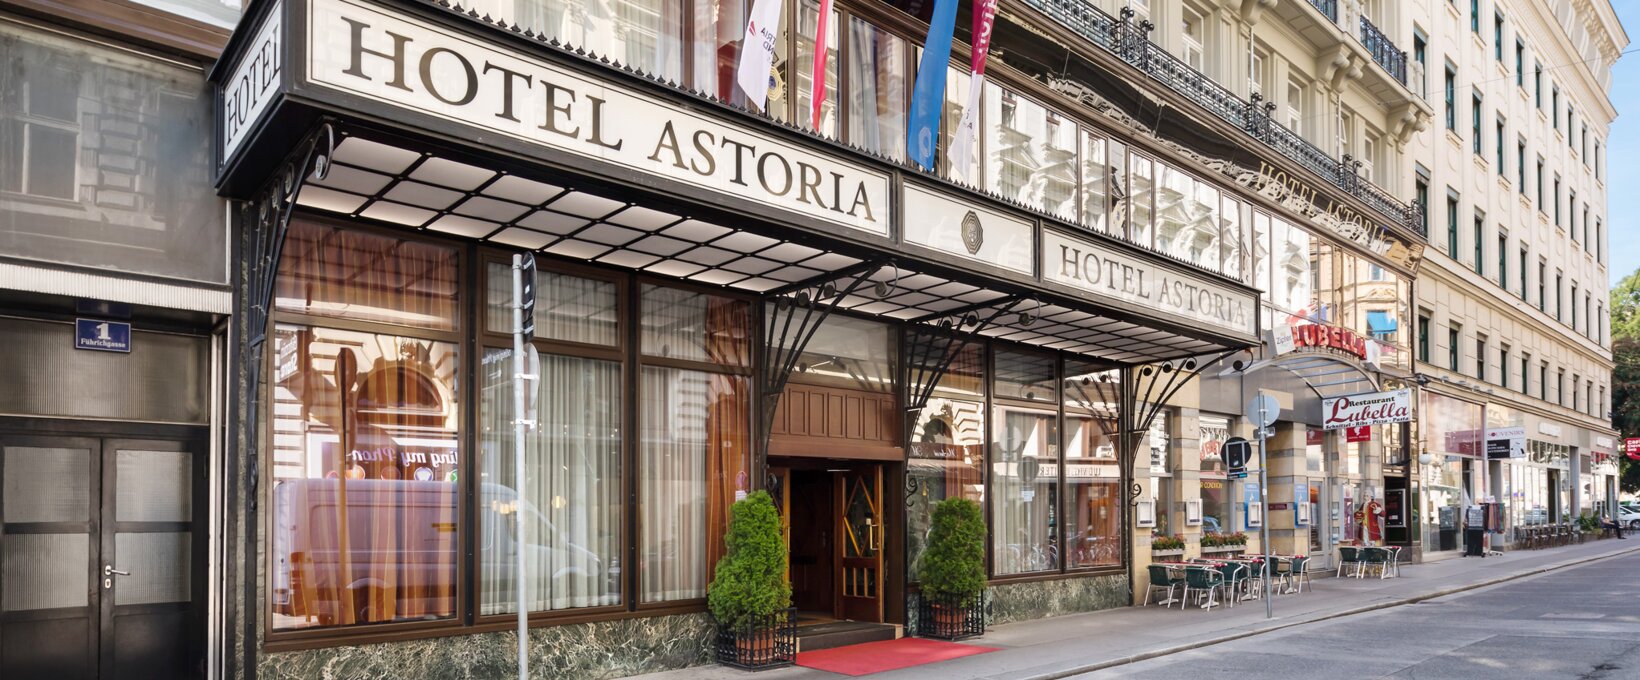 Entrance exterior view | Hotel Astoria in Vienna